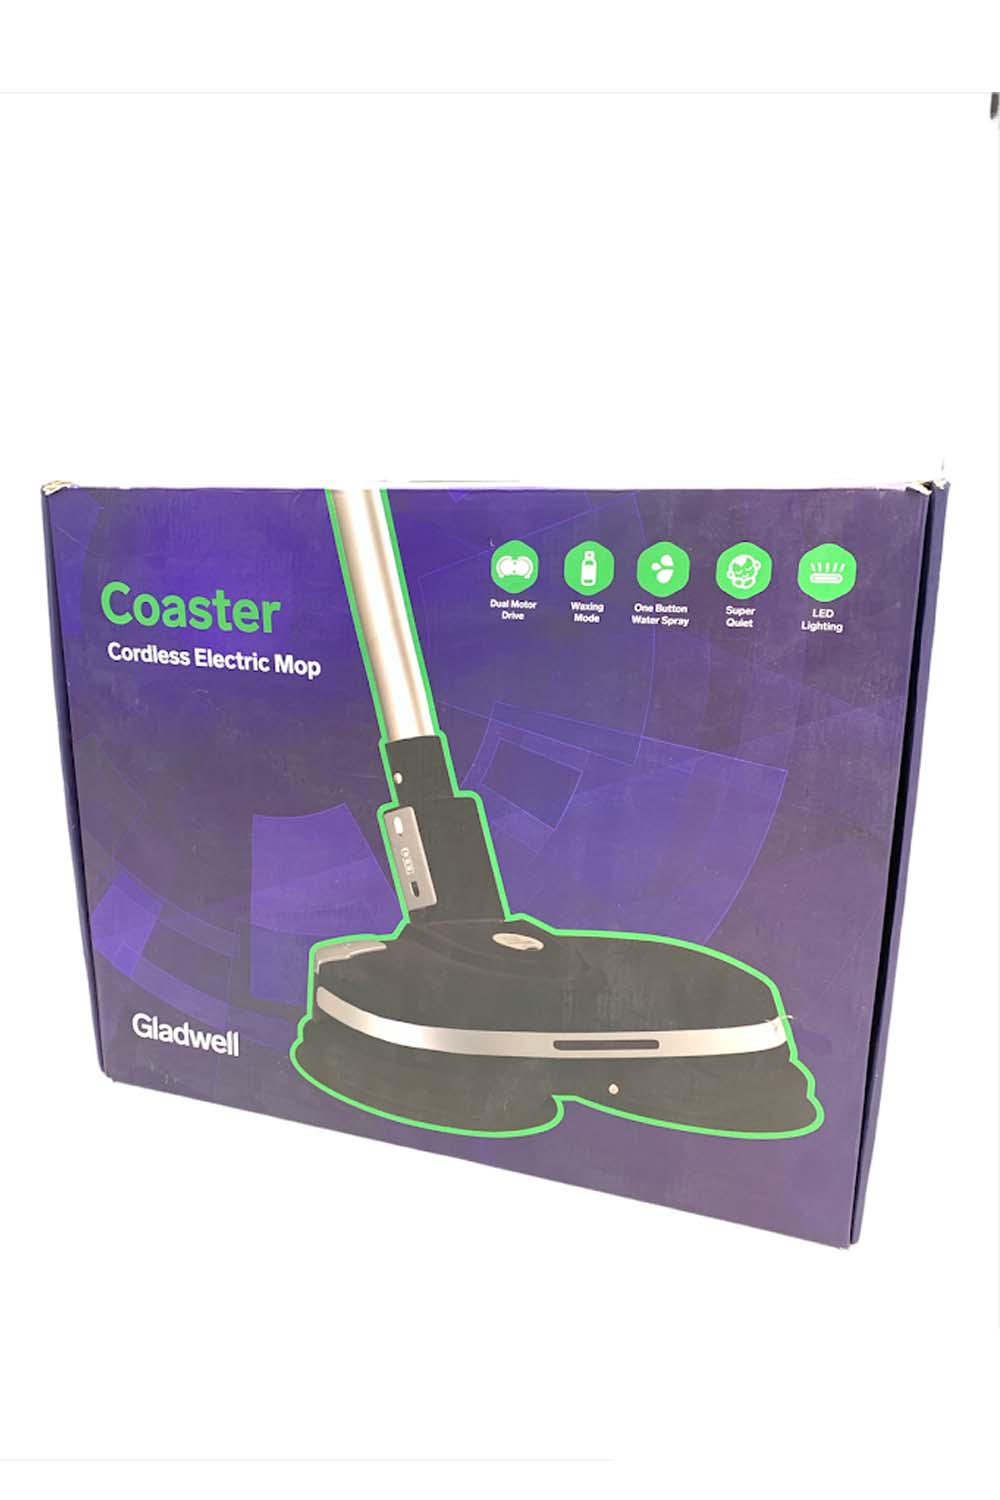 Coaster Cordless Electric Mop